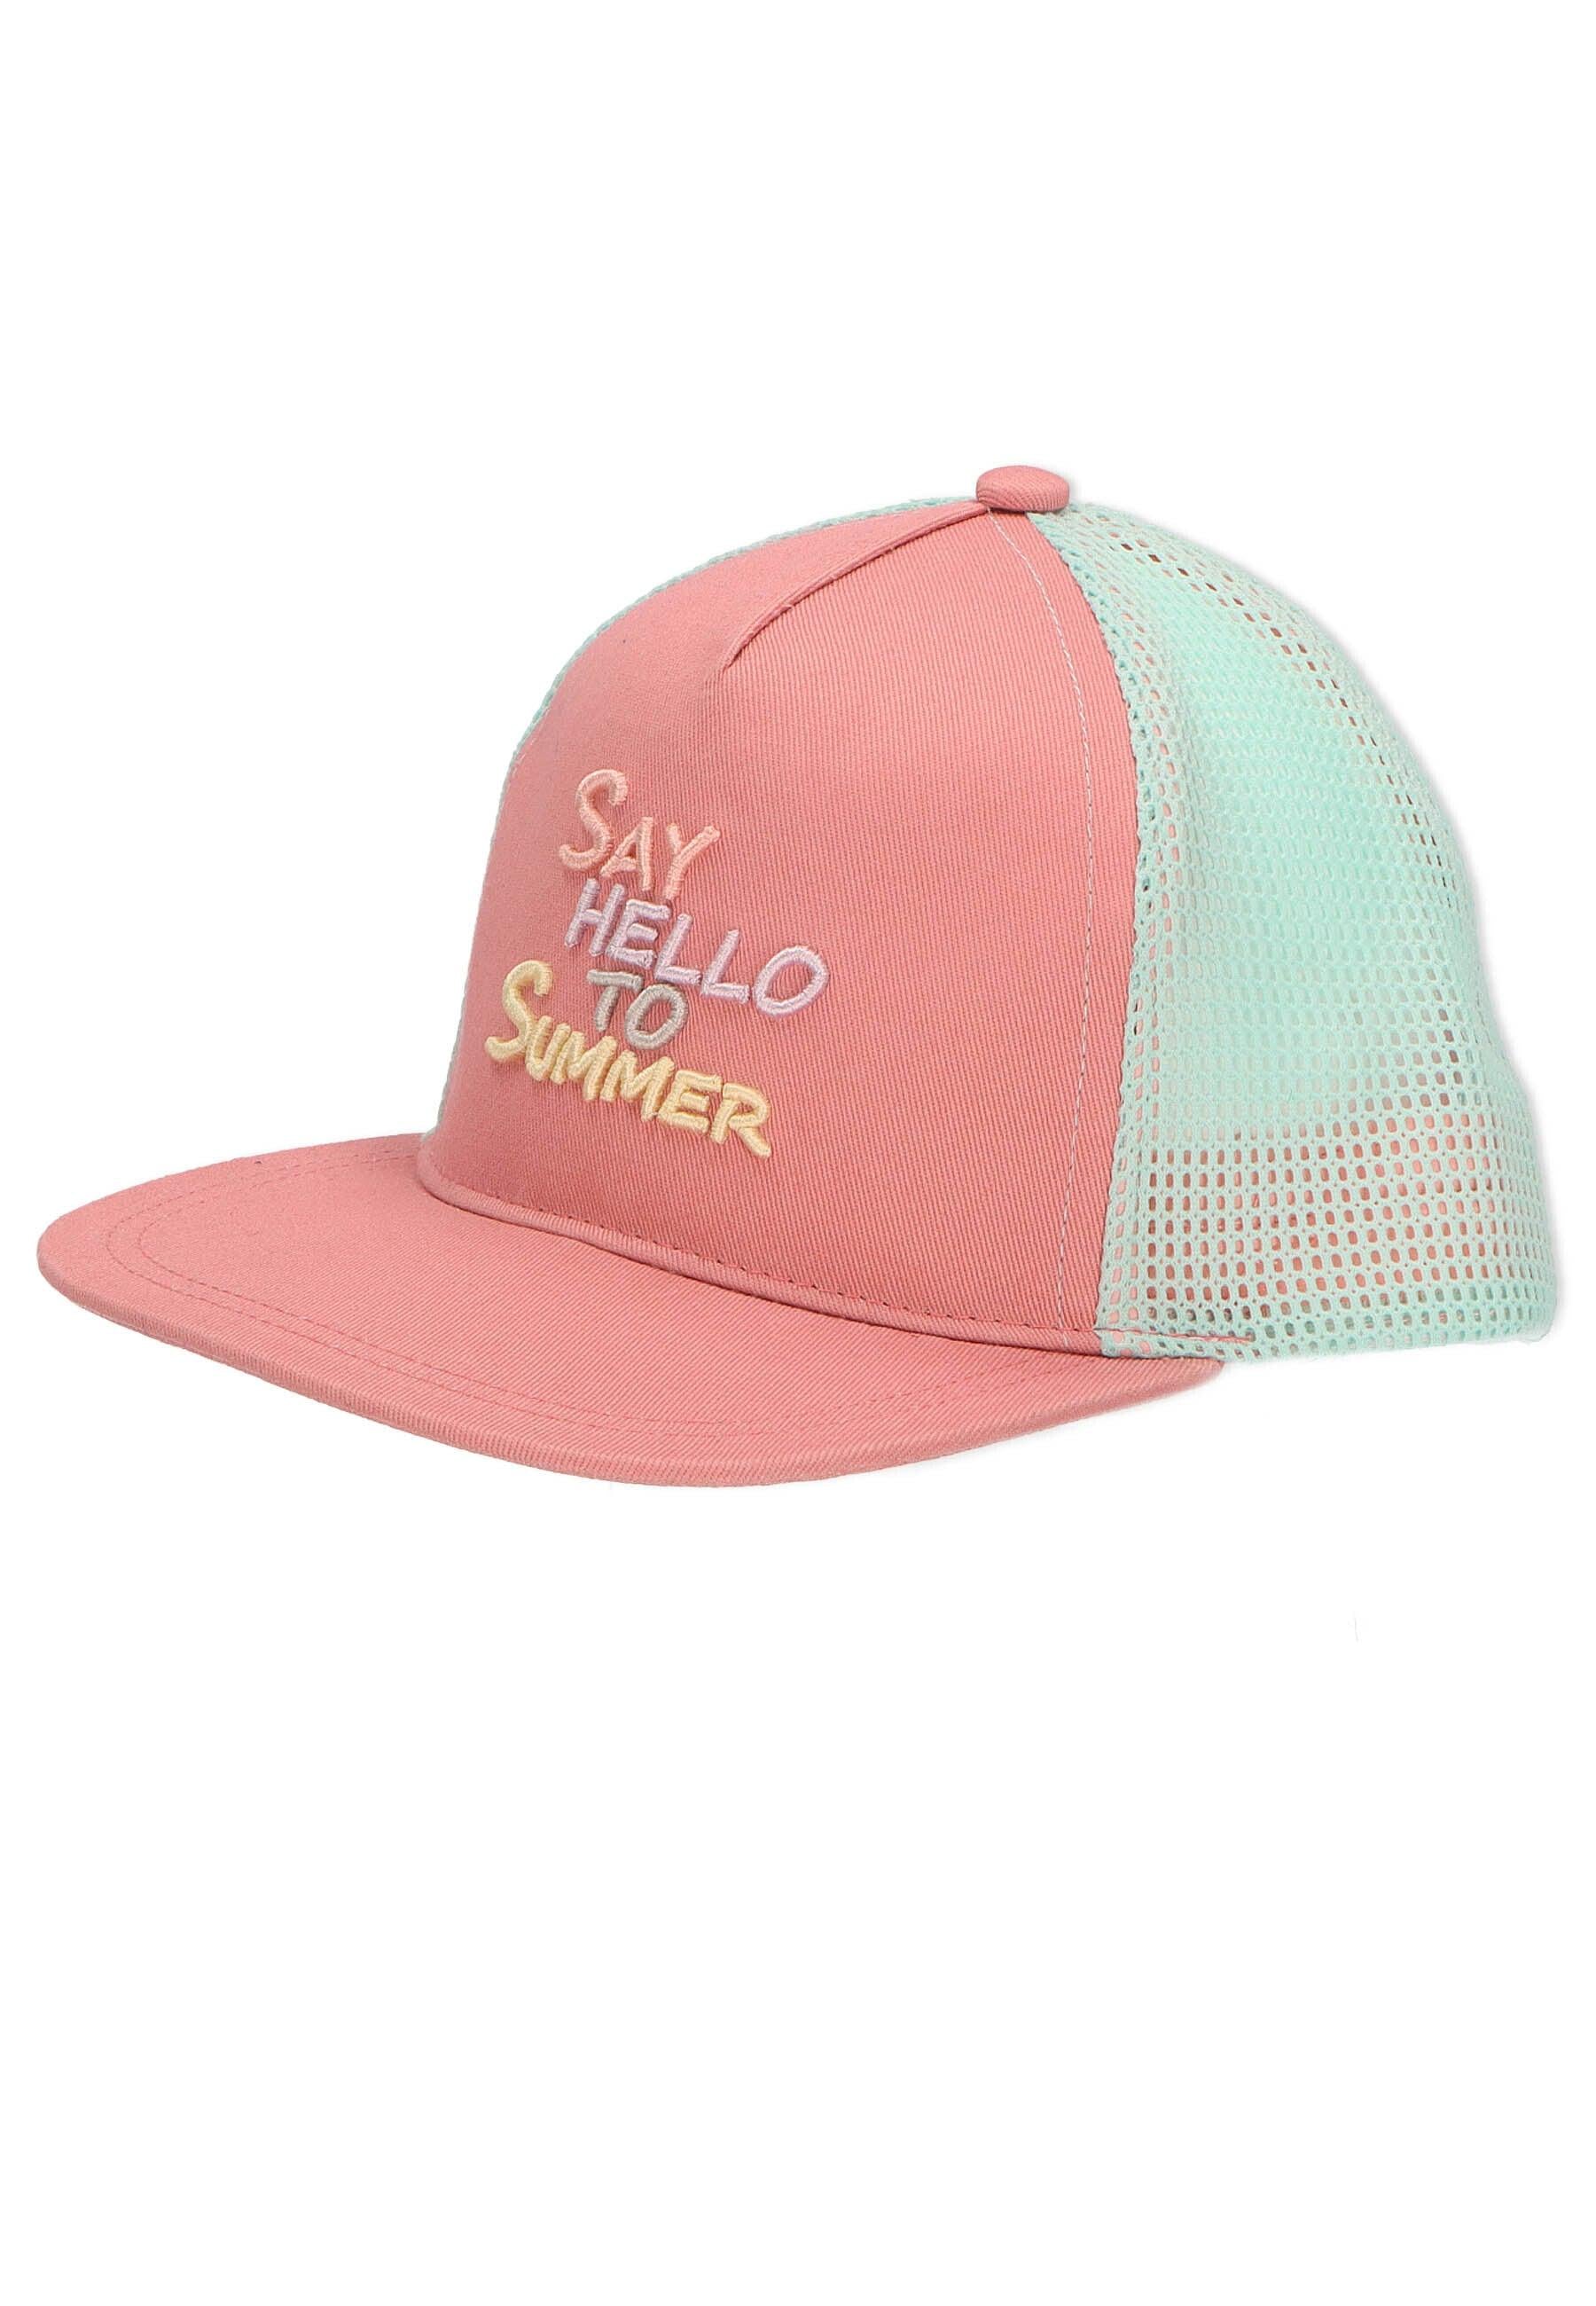 Baseball-Cap Kopfbedeckung Mädchen Kids -  Sterntaler